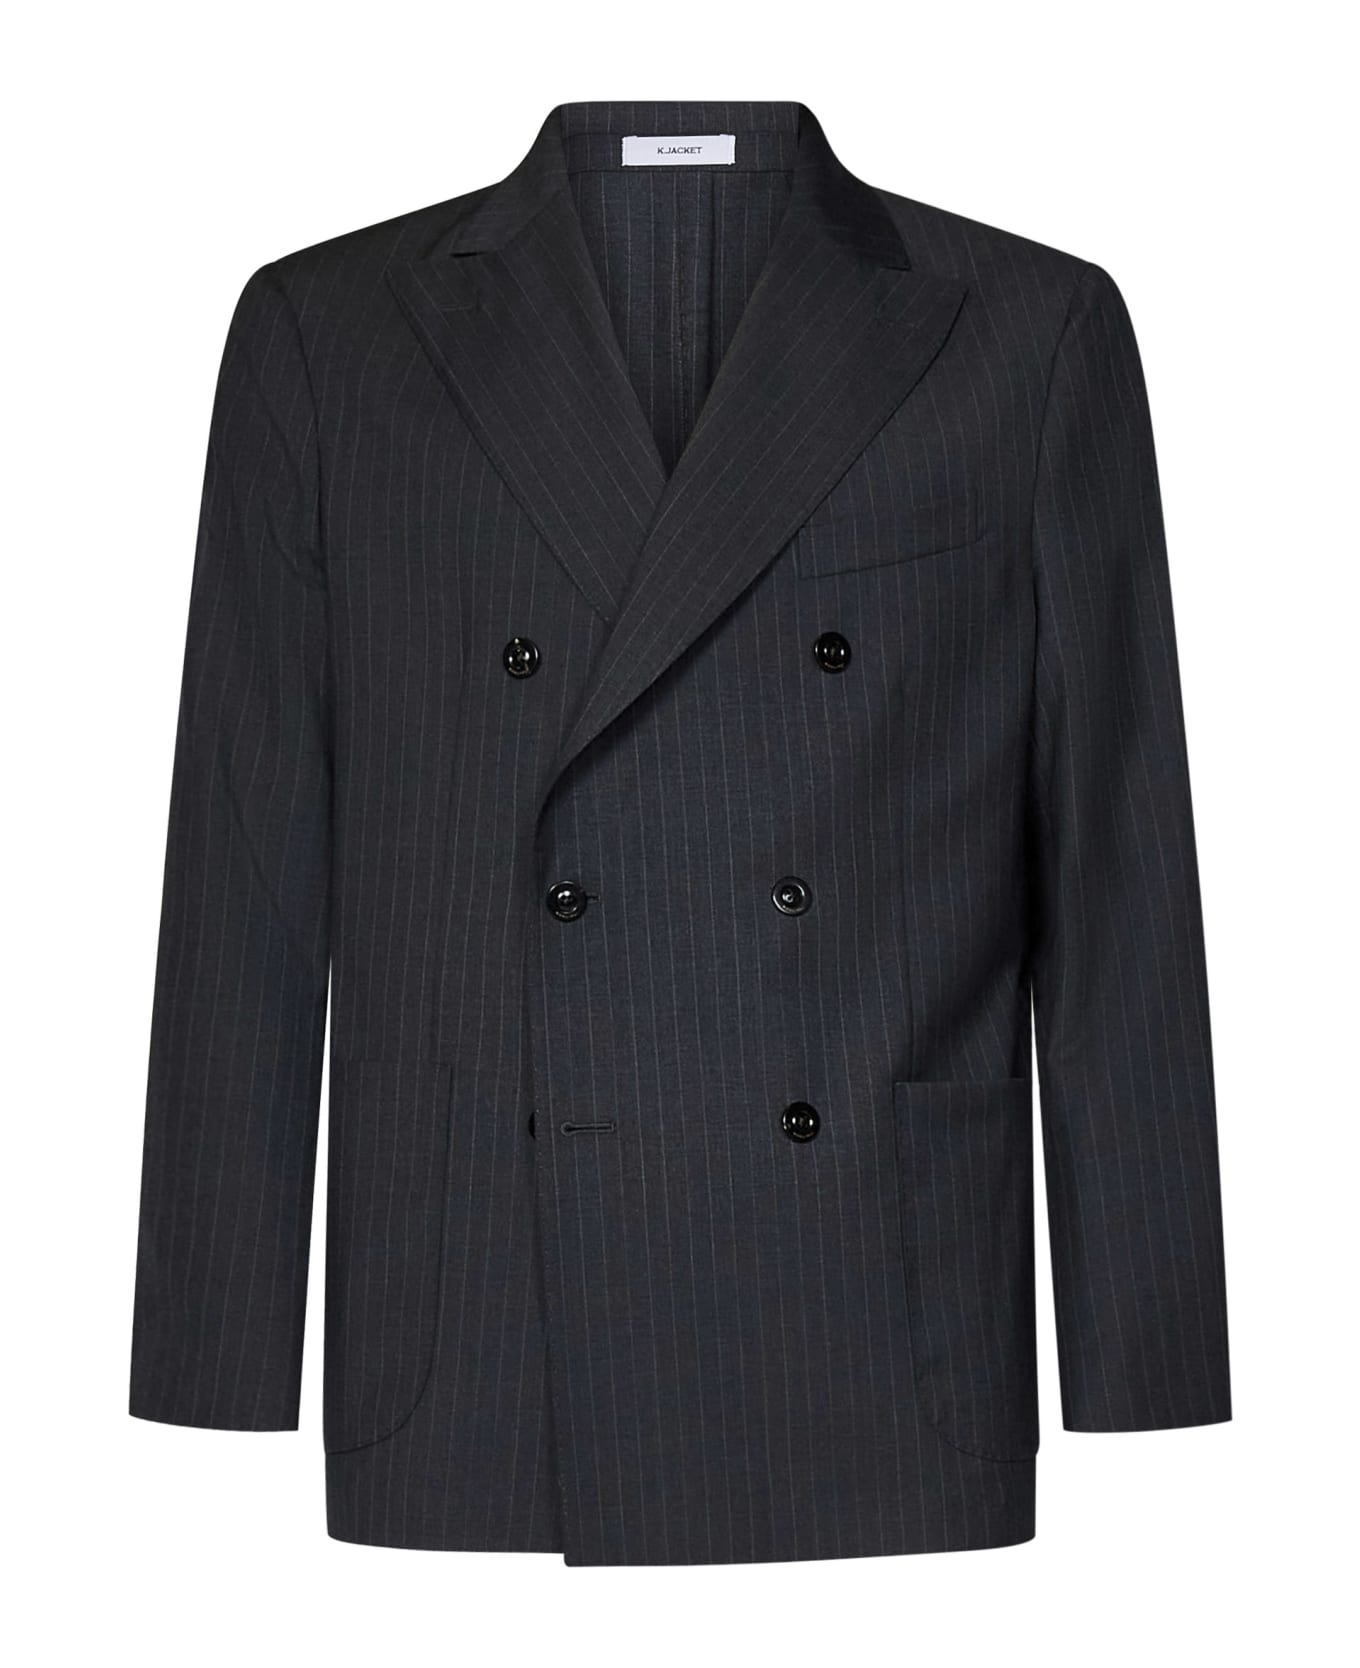 Boglioli K-jacket Suit - Grey